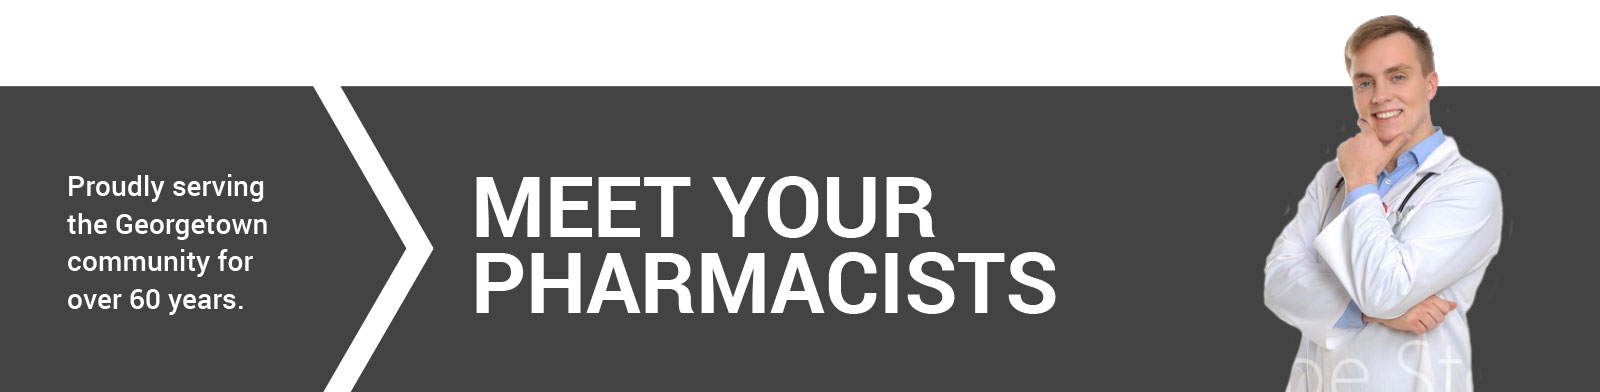 Meet Your Pharmacists